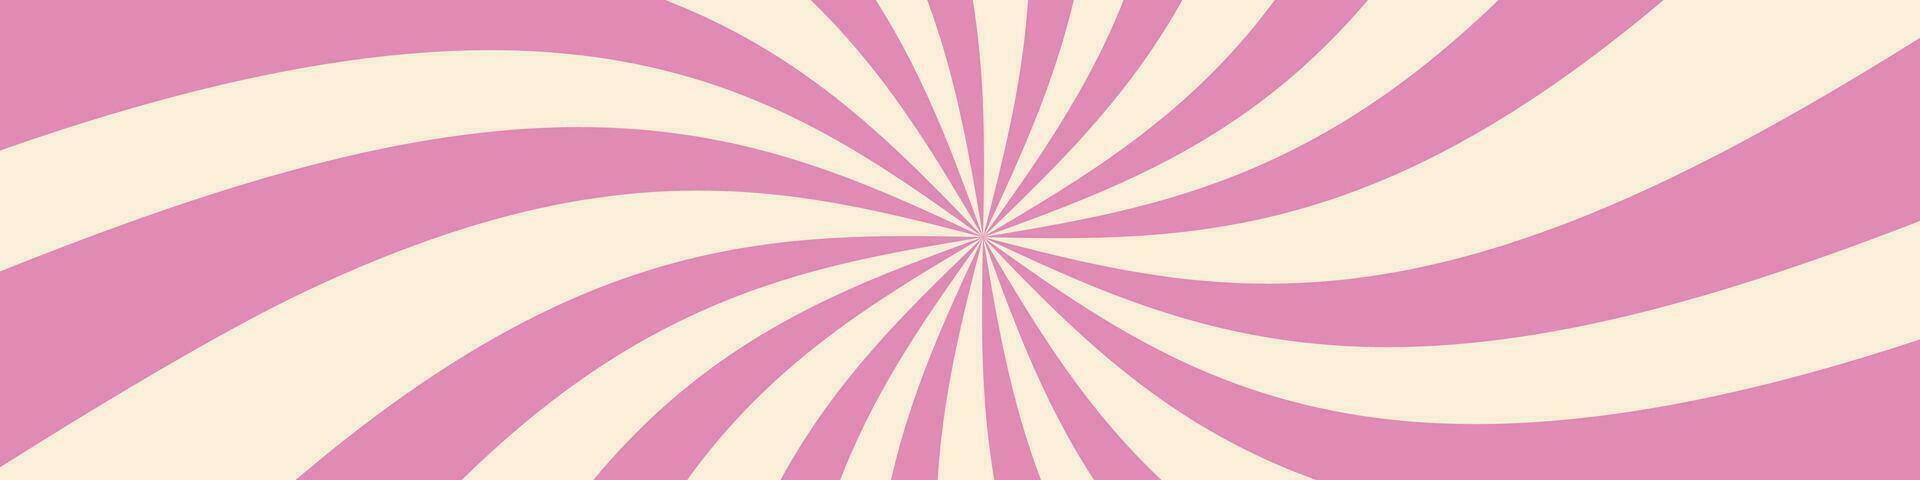 femenino rosado radial antecedentes con retro vibras. espiral modelo complementado por cómic caramelo y popular estética. plano vector ilustración aislado en blanco antecedentes.